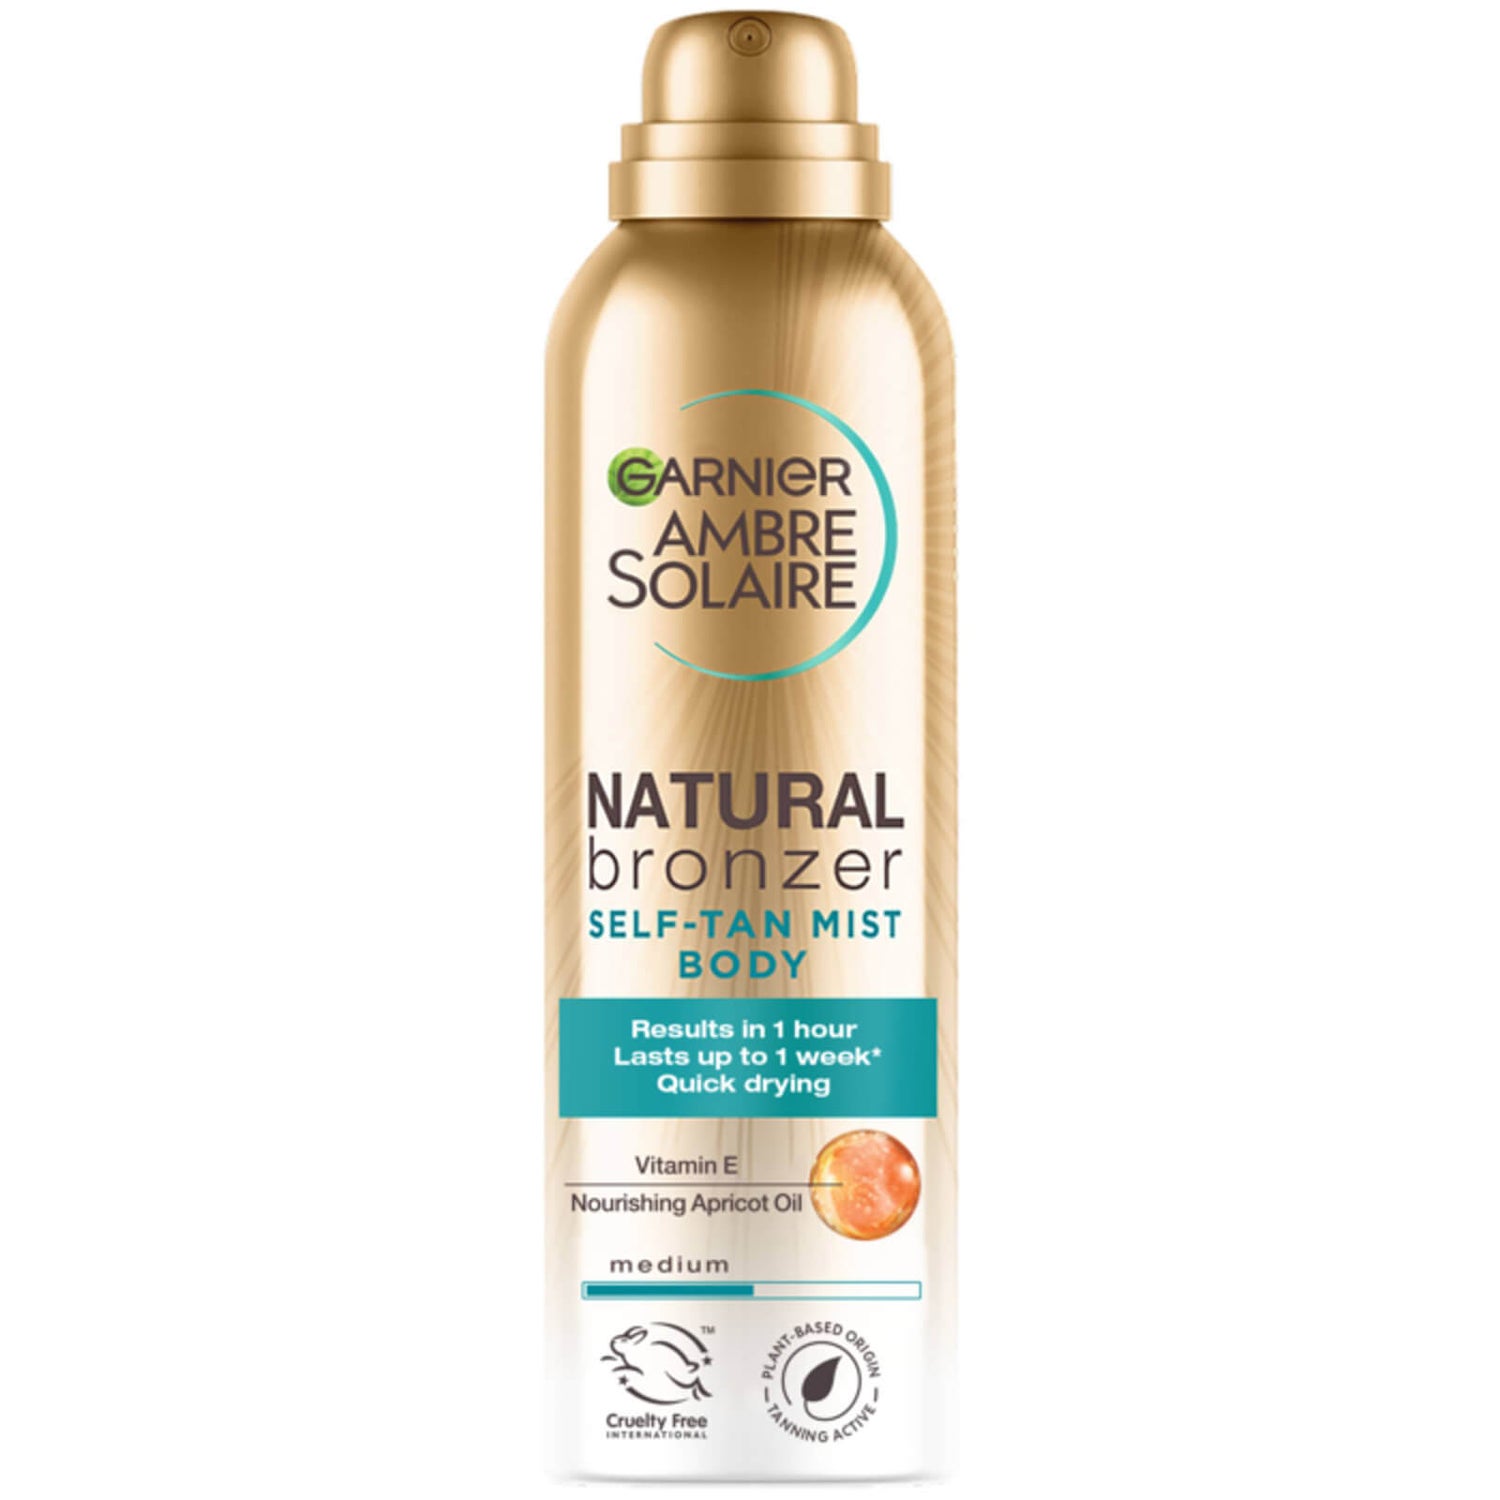 Garnier Ambre Solaire Natural Bronzer Quick Drying Body Self Tan Mist Medium 150ml